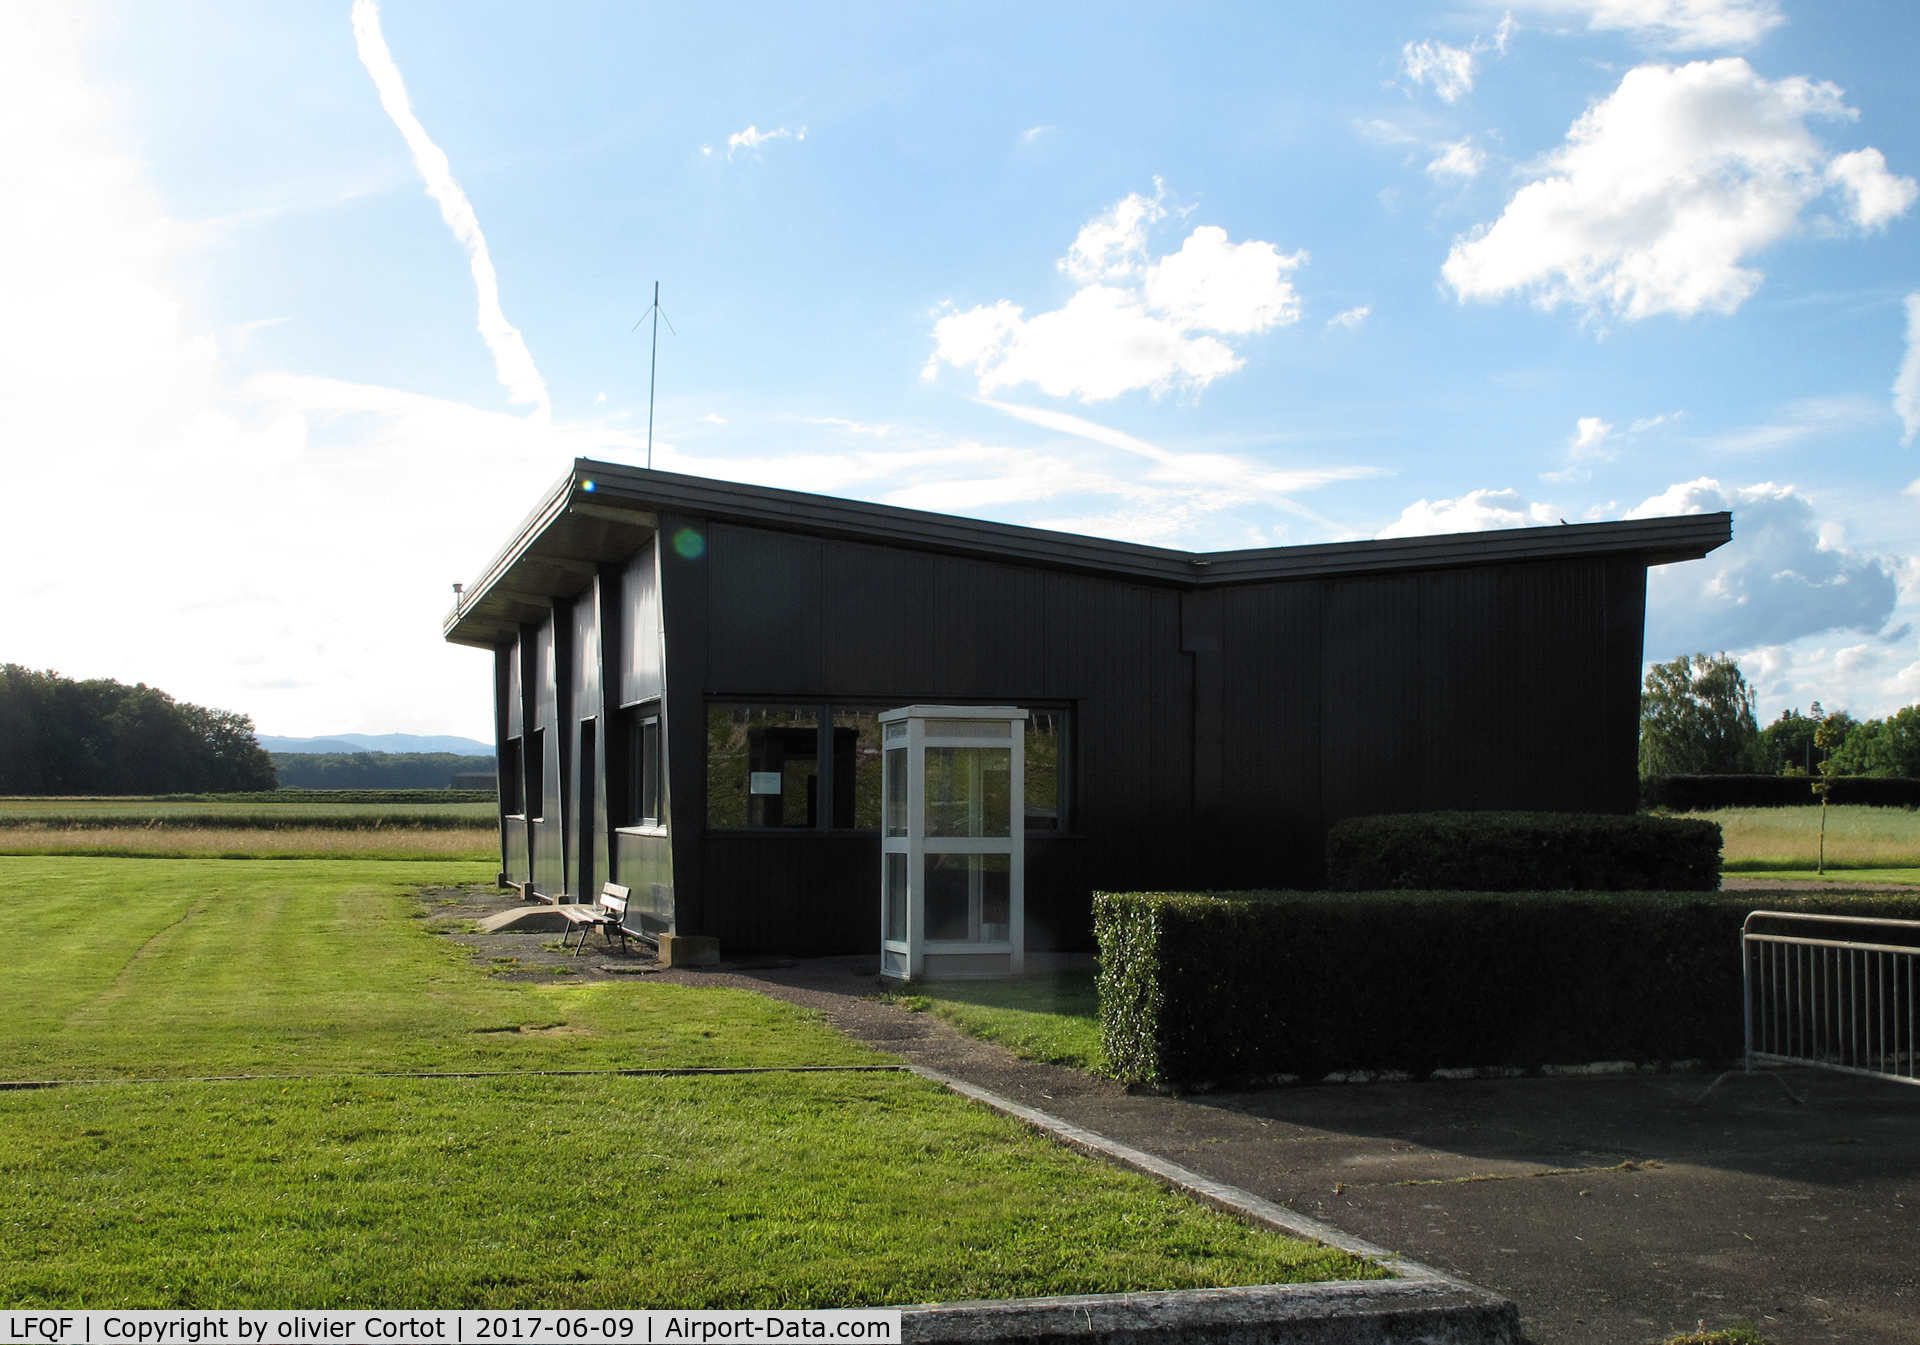 Autun Bellevue Airport, Autun France (LFQF) - the office building